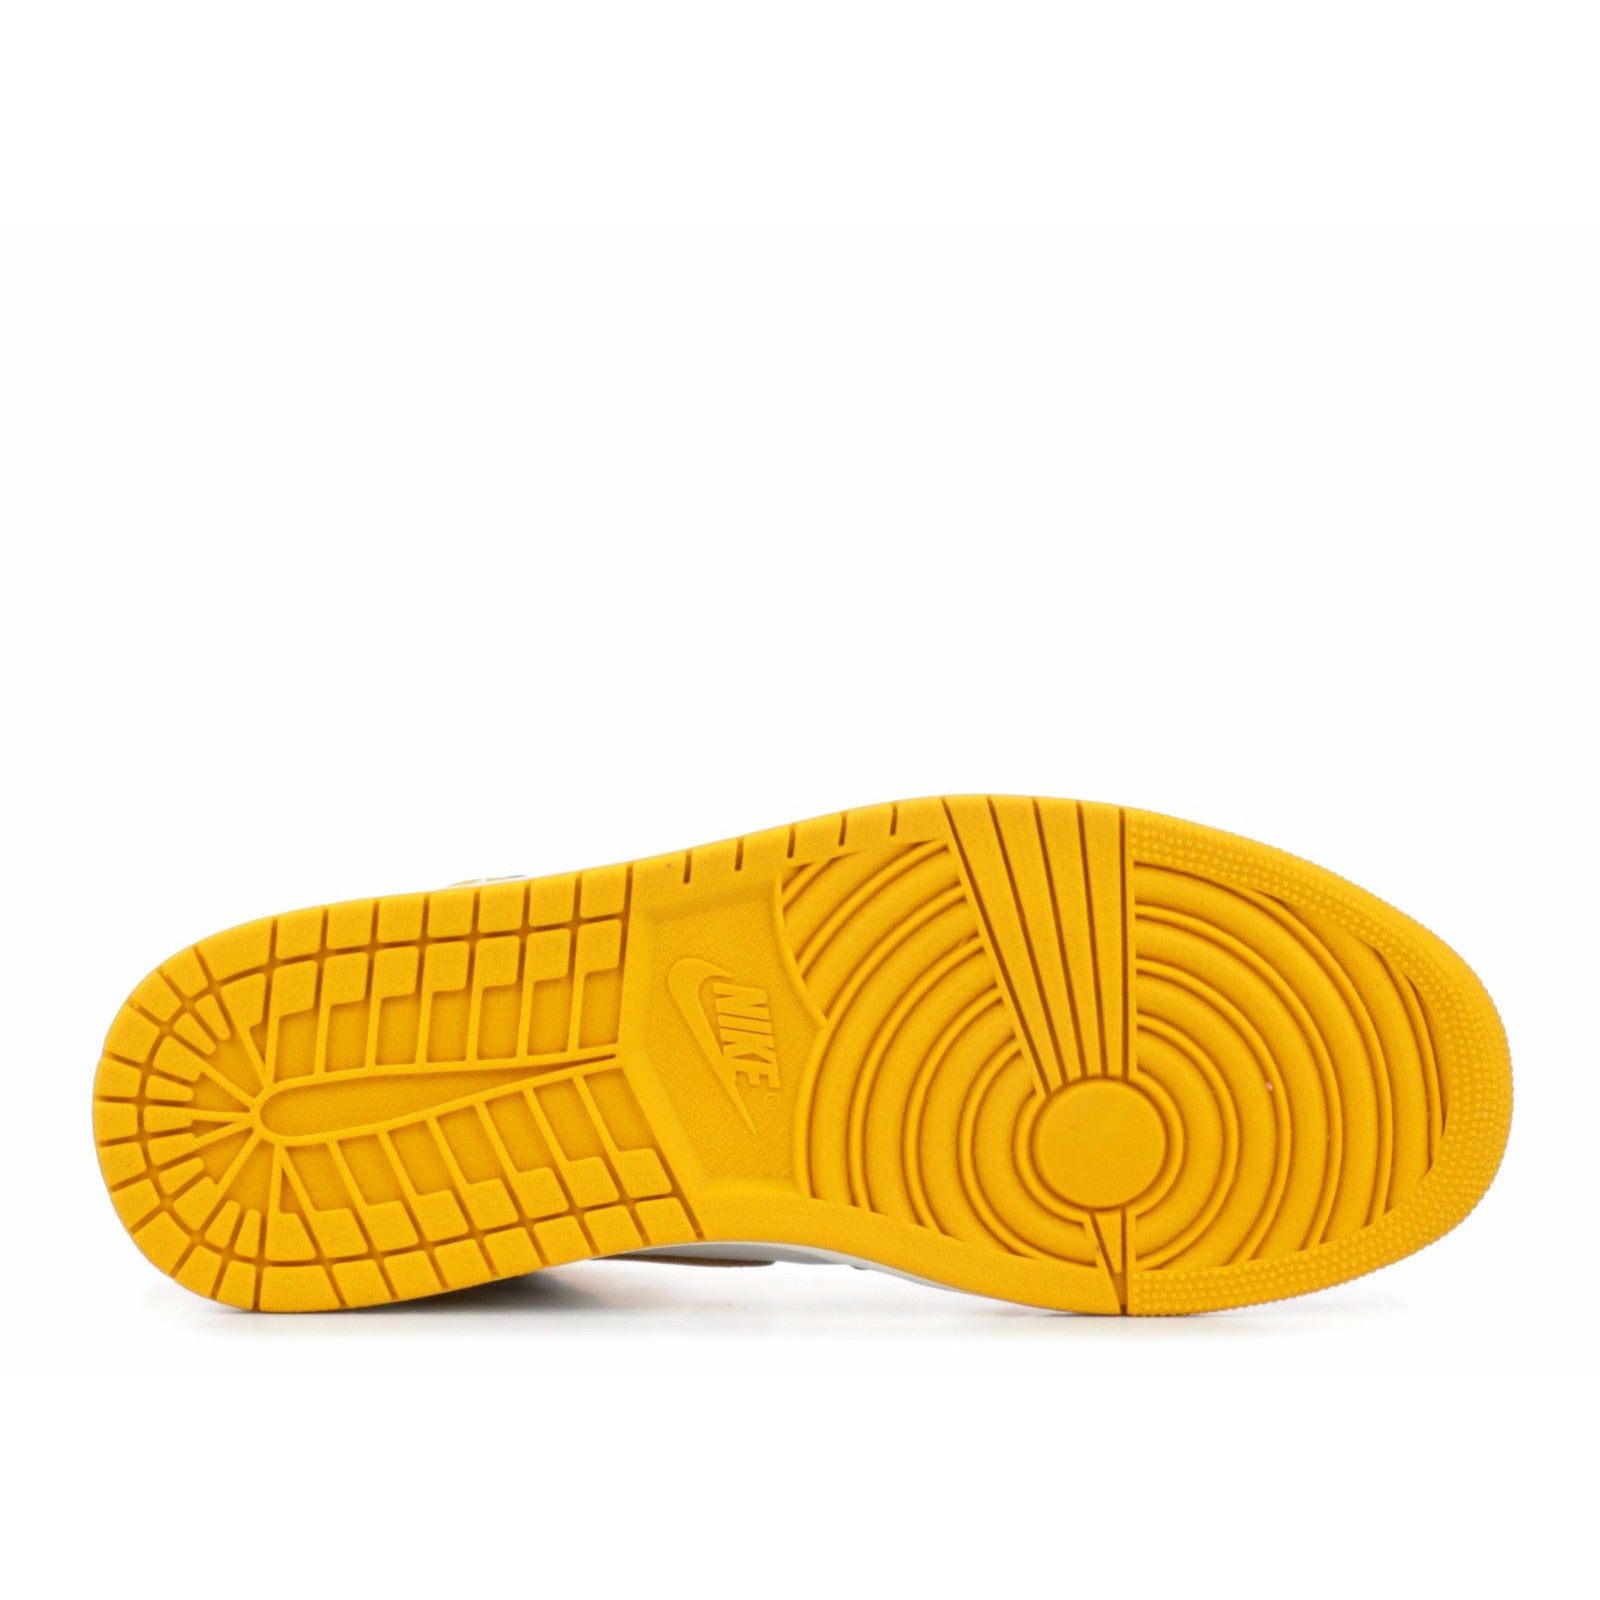 Air Jordan-Air Jordan 1 Retro High "Yellow Ochre"-Air Jordan 1 Retro High "Yellow Ochre"
Product code: 555088-109 Colour: Summit White/Yellow Ochre-Black Year of release: 2018
| MrSneaker is Europe's number 1 exclusive sneaker store.-mrsneaker